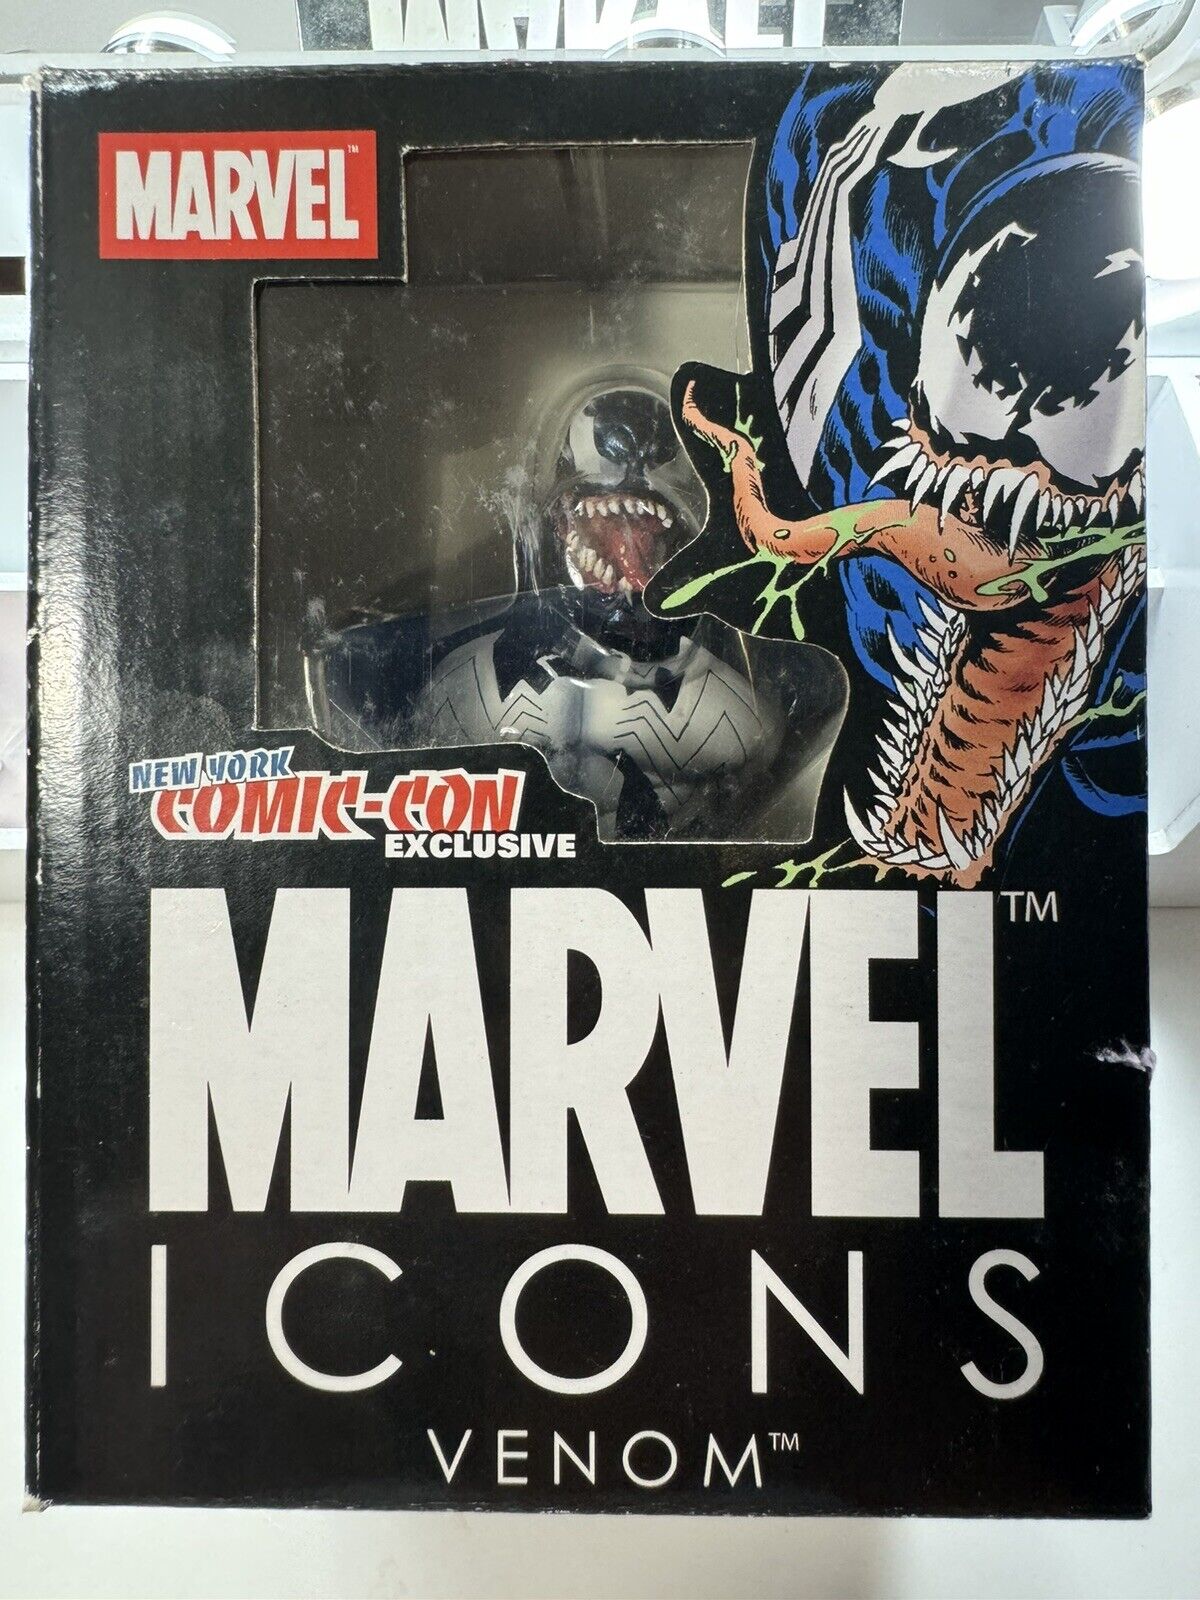 **NEW SEALED BOX** Diamond Select Marvel Icon Venom Mini Bust 186 of 600